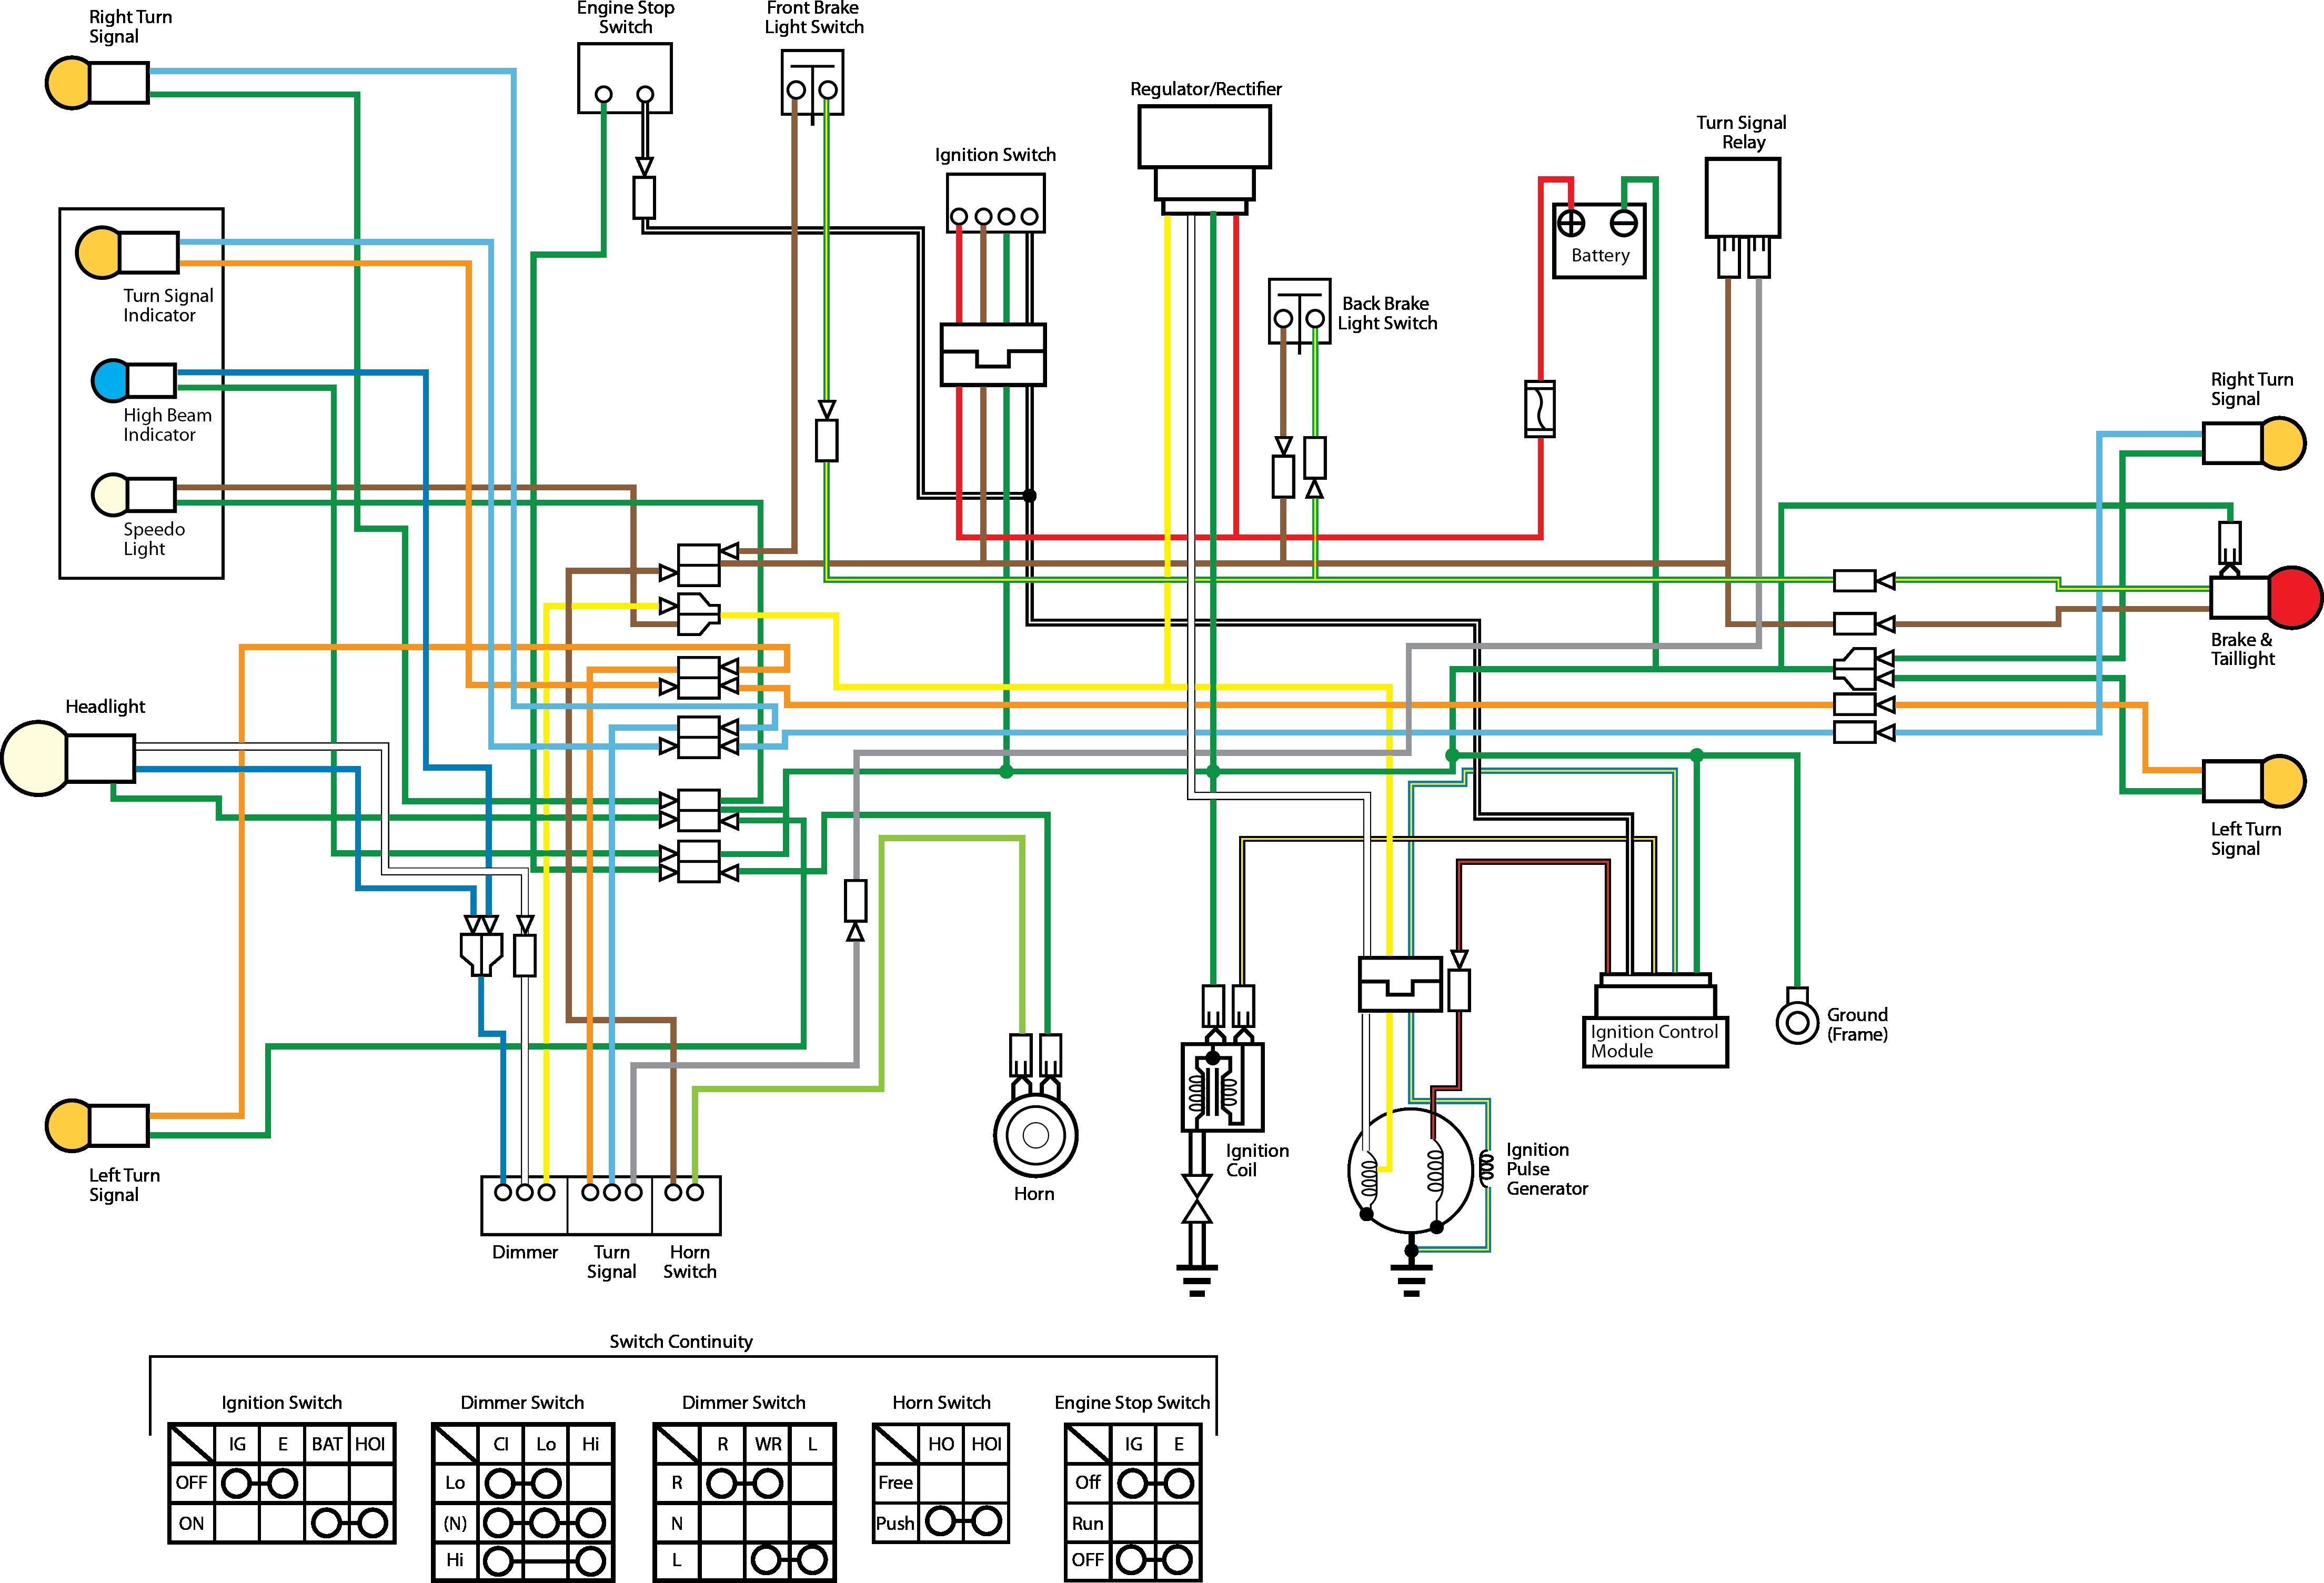 Honda Gx390 Electric Start Wiring Diagram Rate Honda Design Diagram Illustration Wiring Diagram